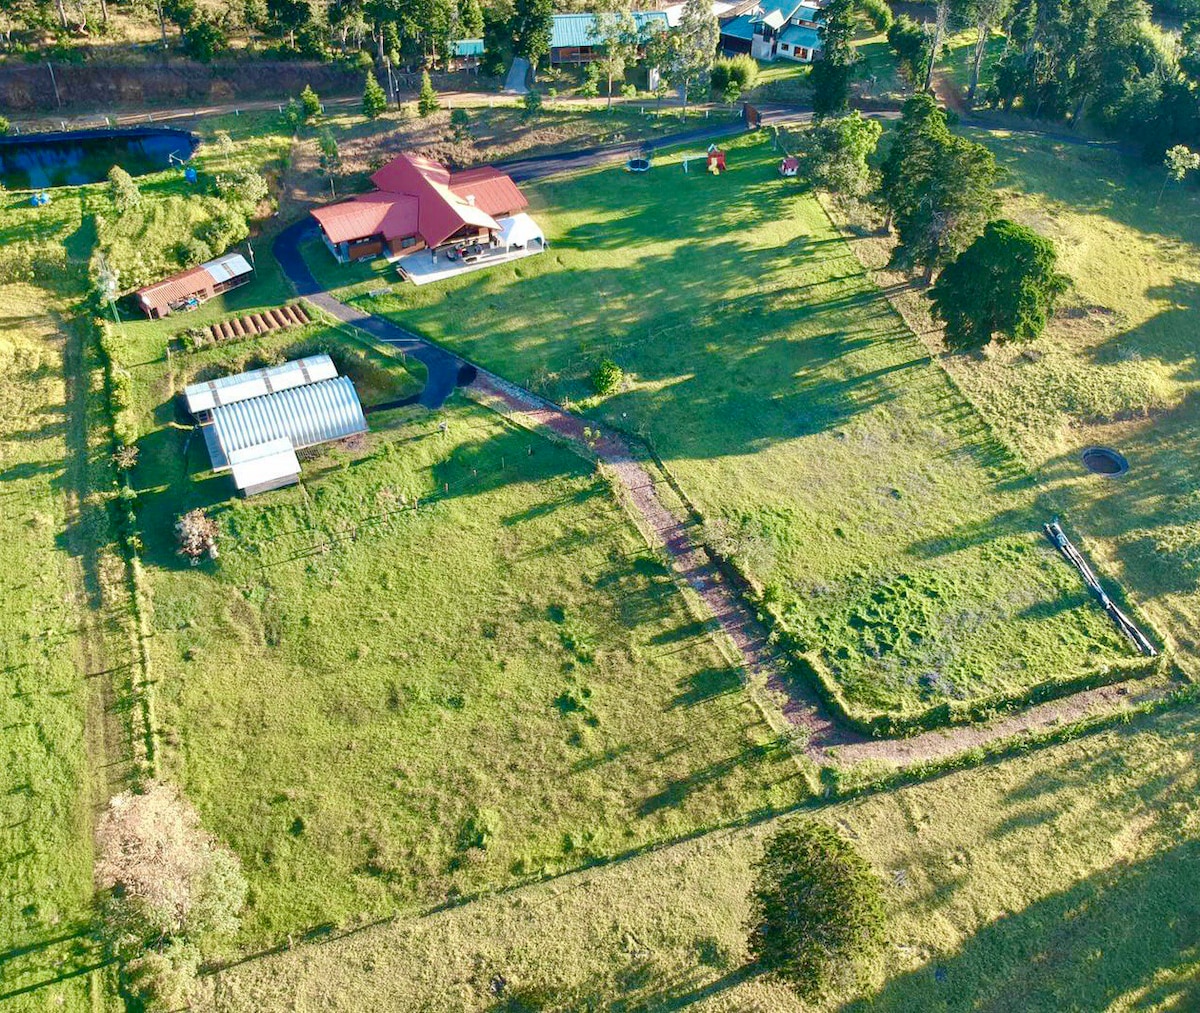 4 BEDROOM HOUSE FARM AT POAS MOUNTAINS, COSTA RICA